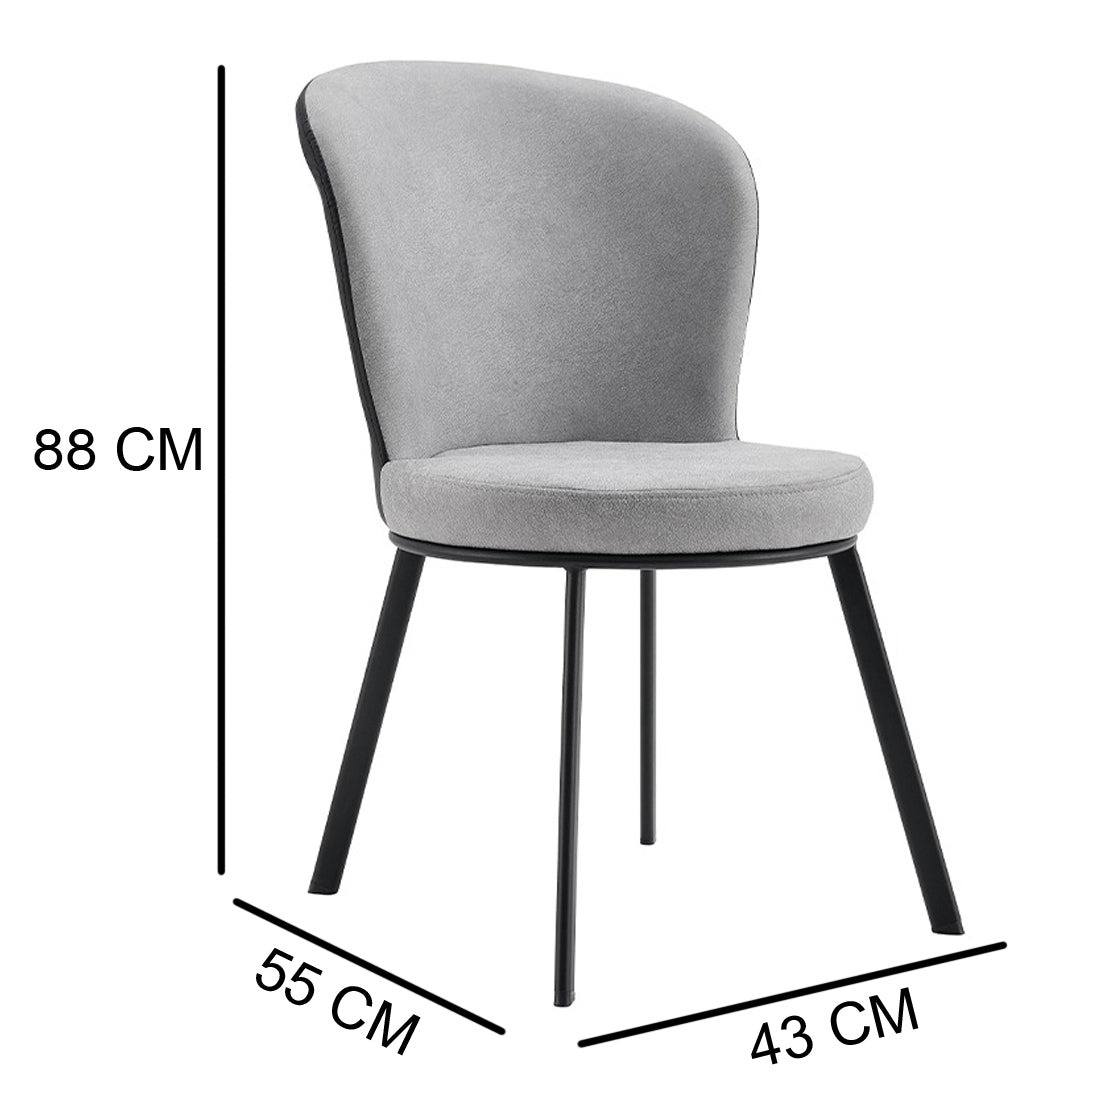 Metal Chair with Cushion - Grey Chair urbancart.in